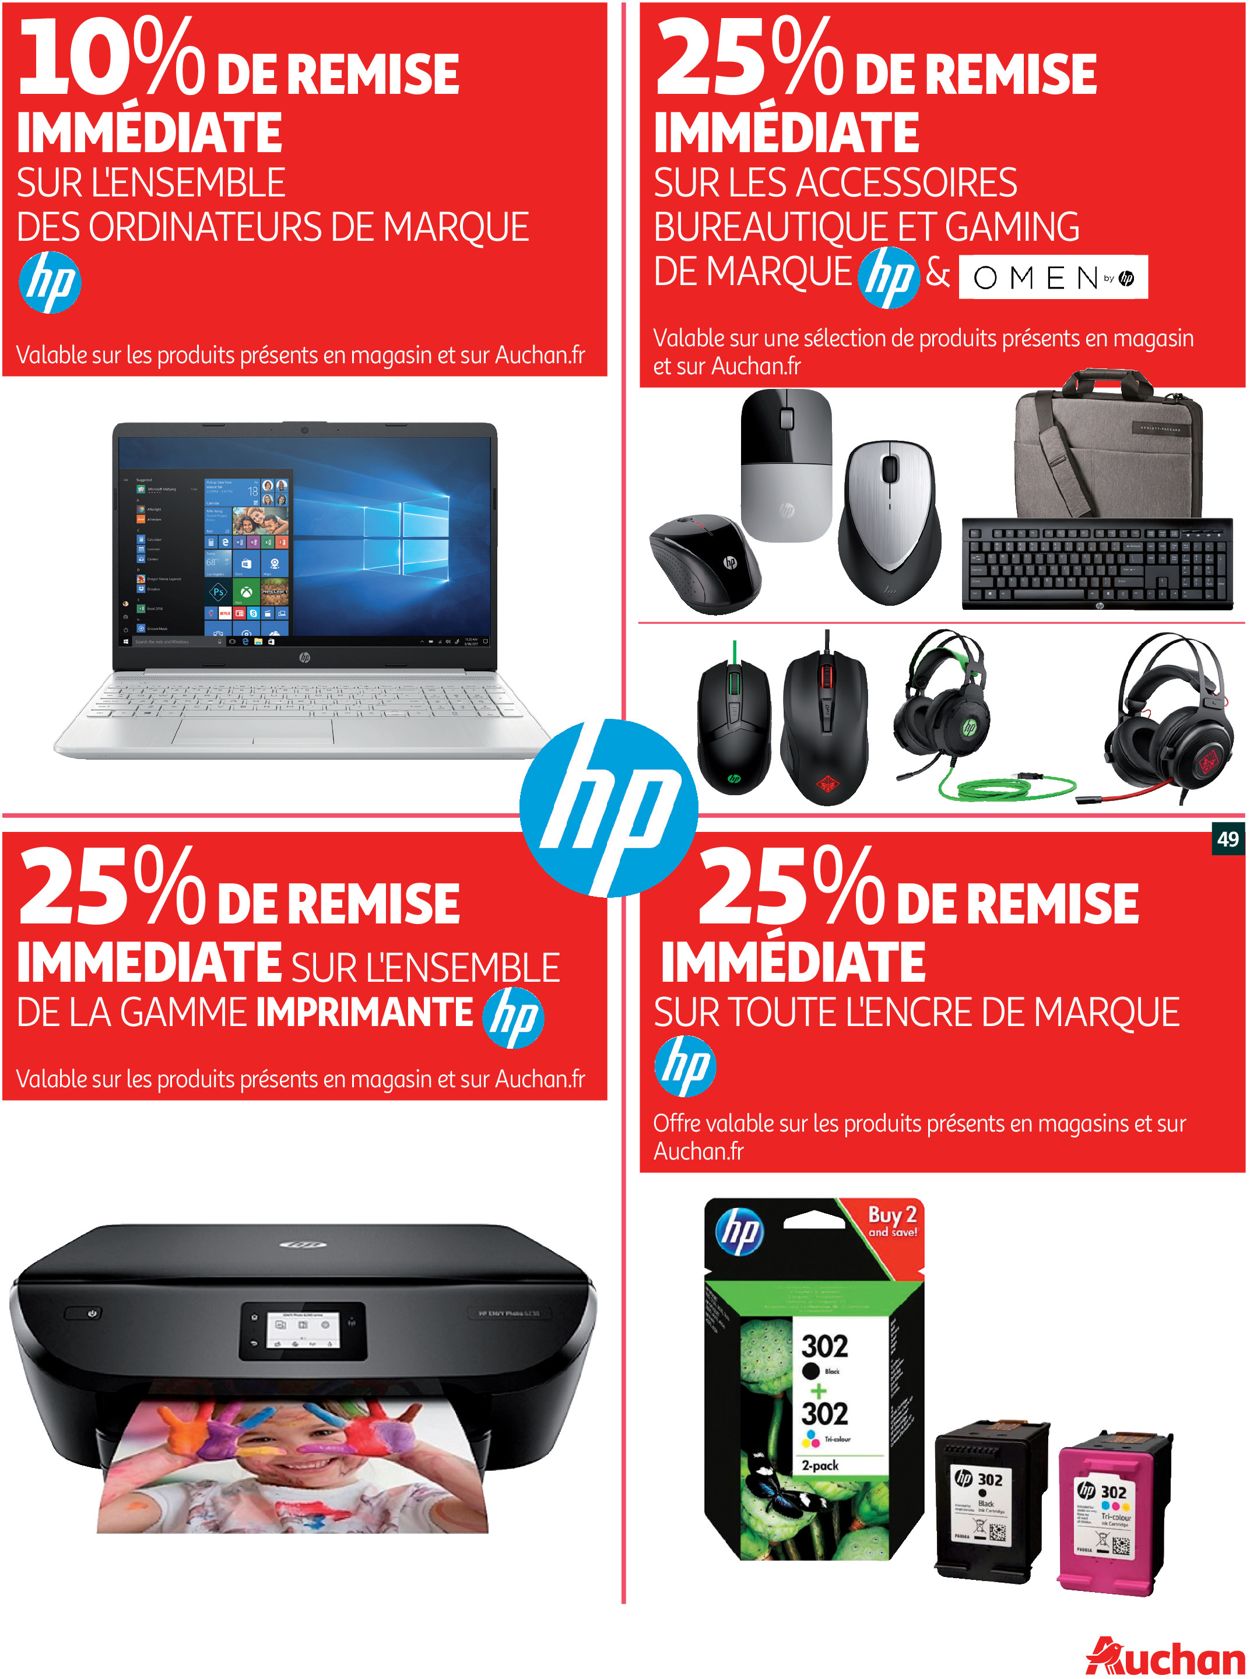 Auchan Catalogue - 06.11-12.11.2019 (Page 49)